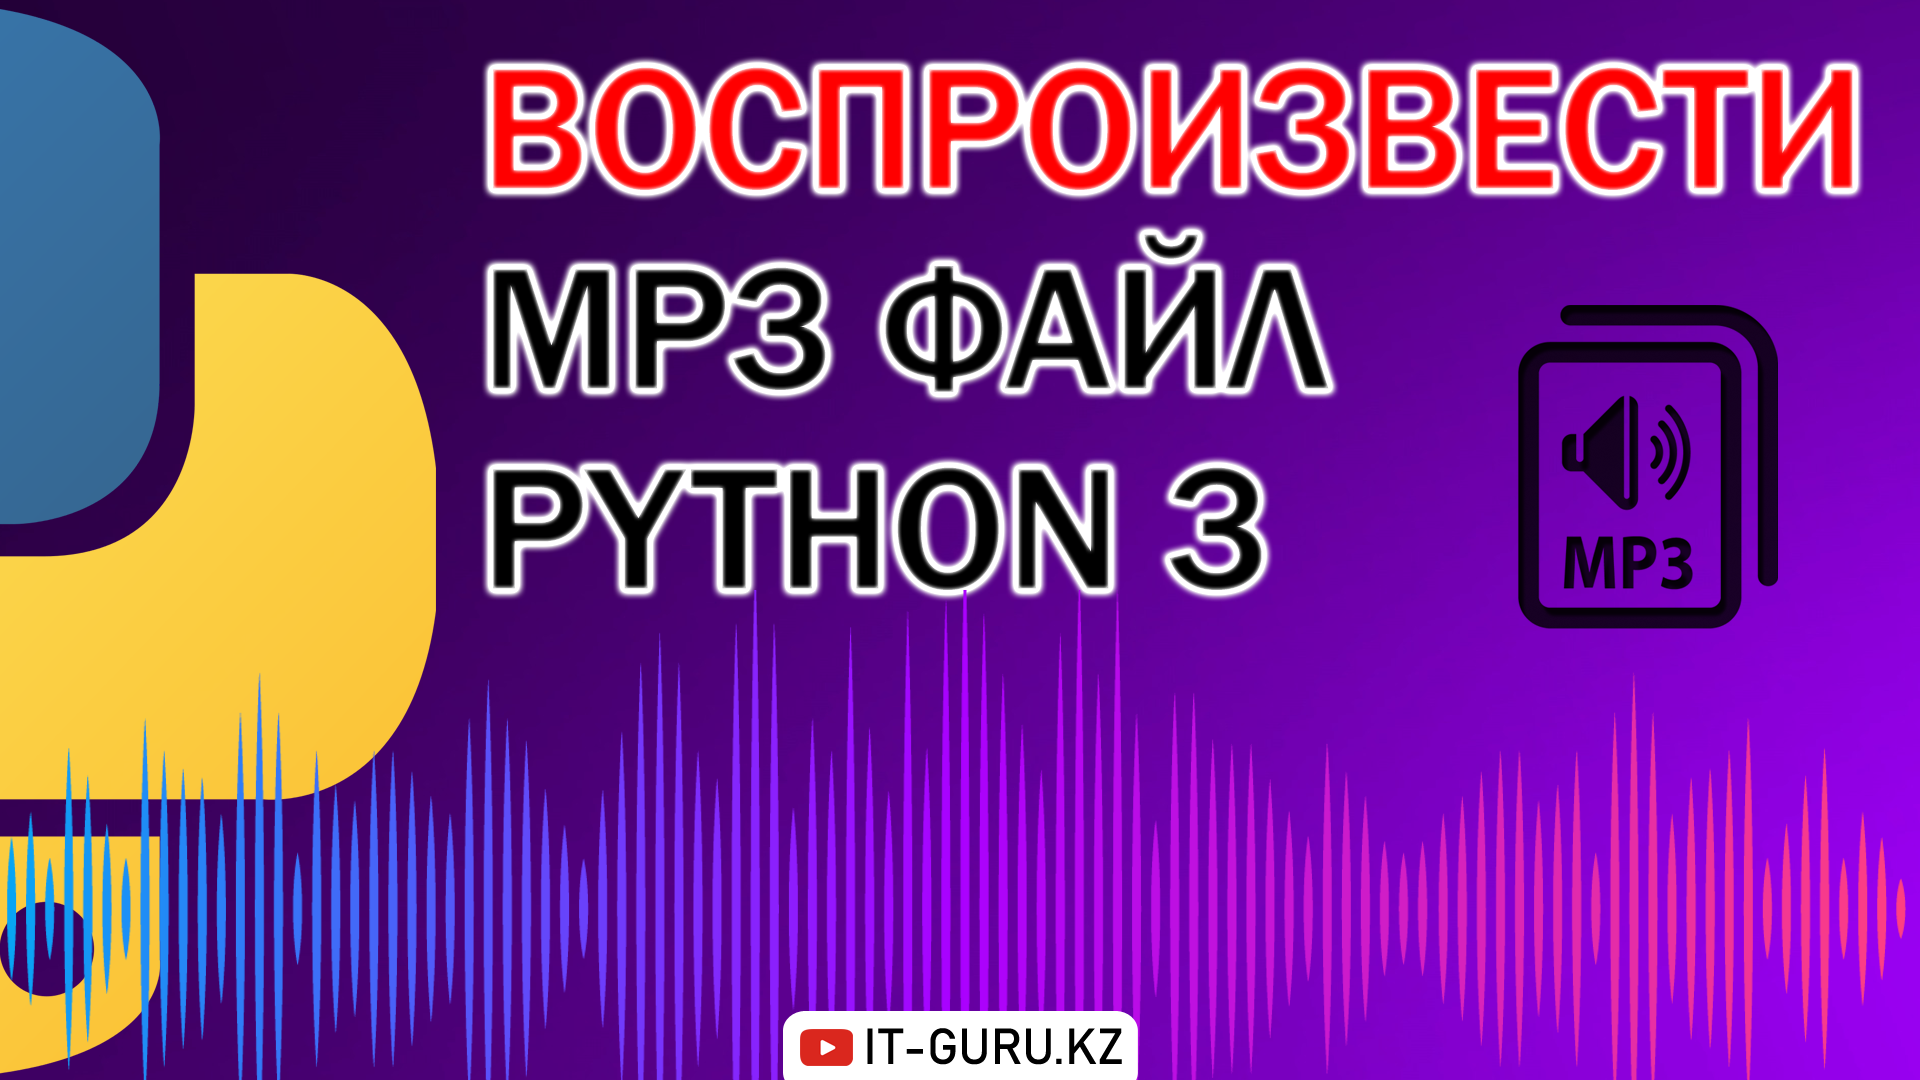 Как воспроизвести mp3 файл (самый простой способ) Python 3